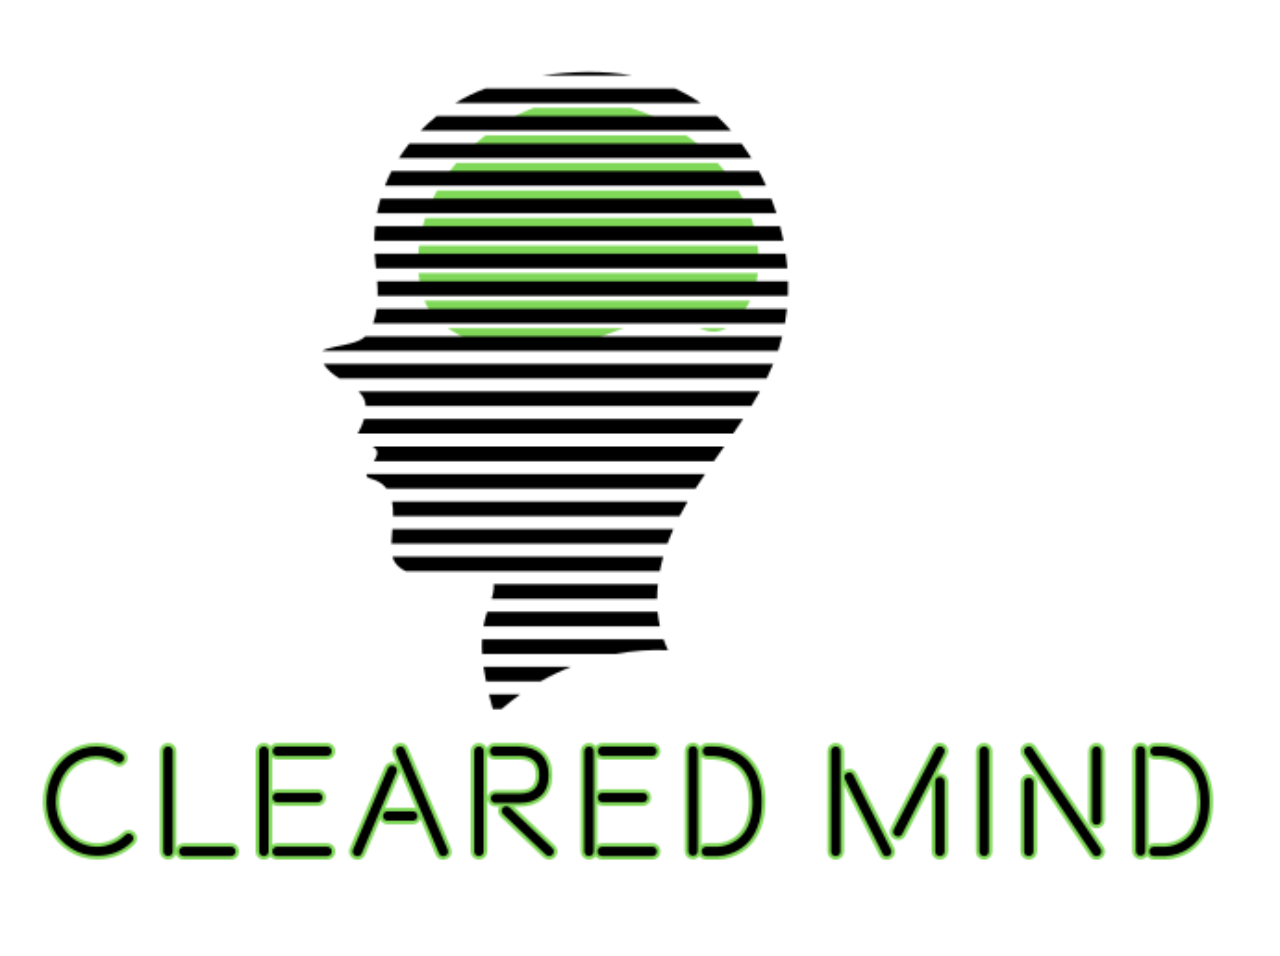 CLEARED MIND's logo